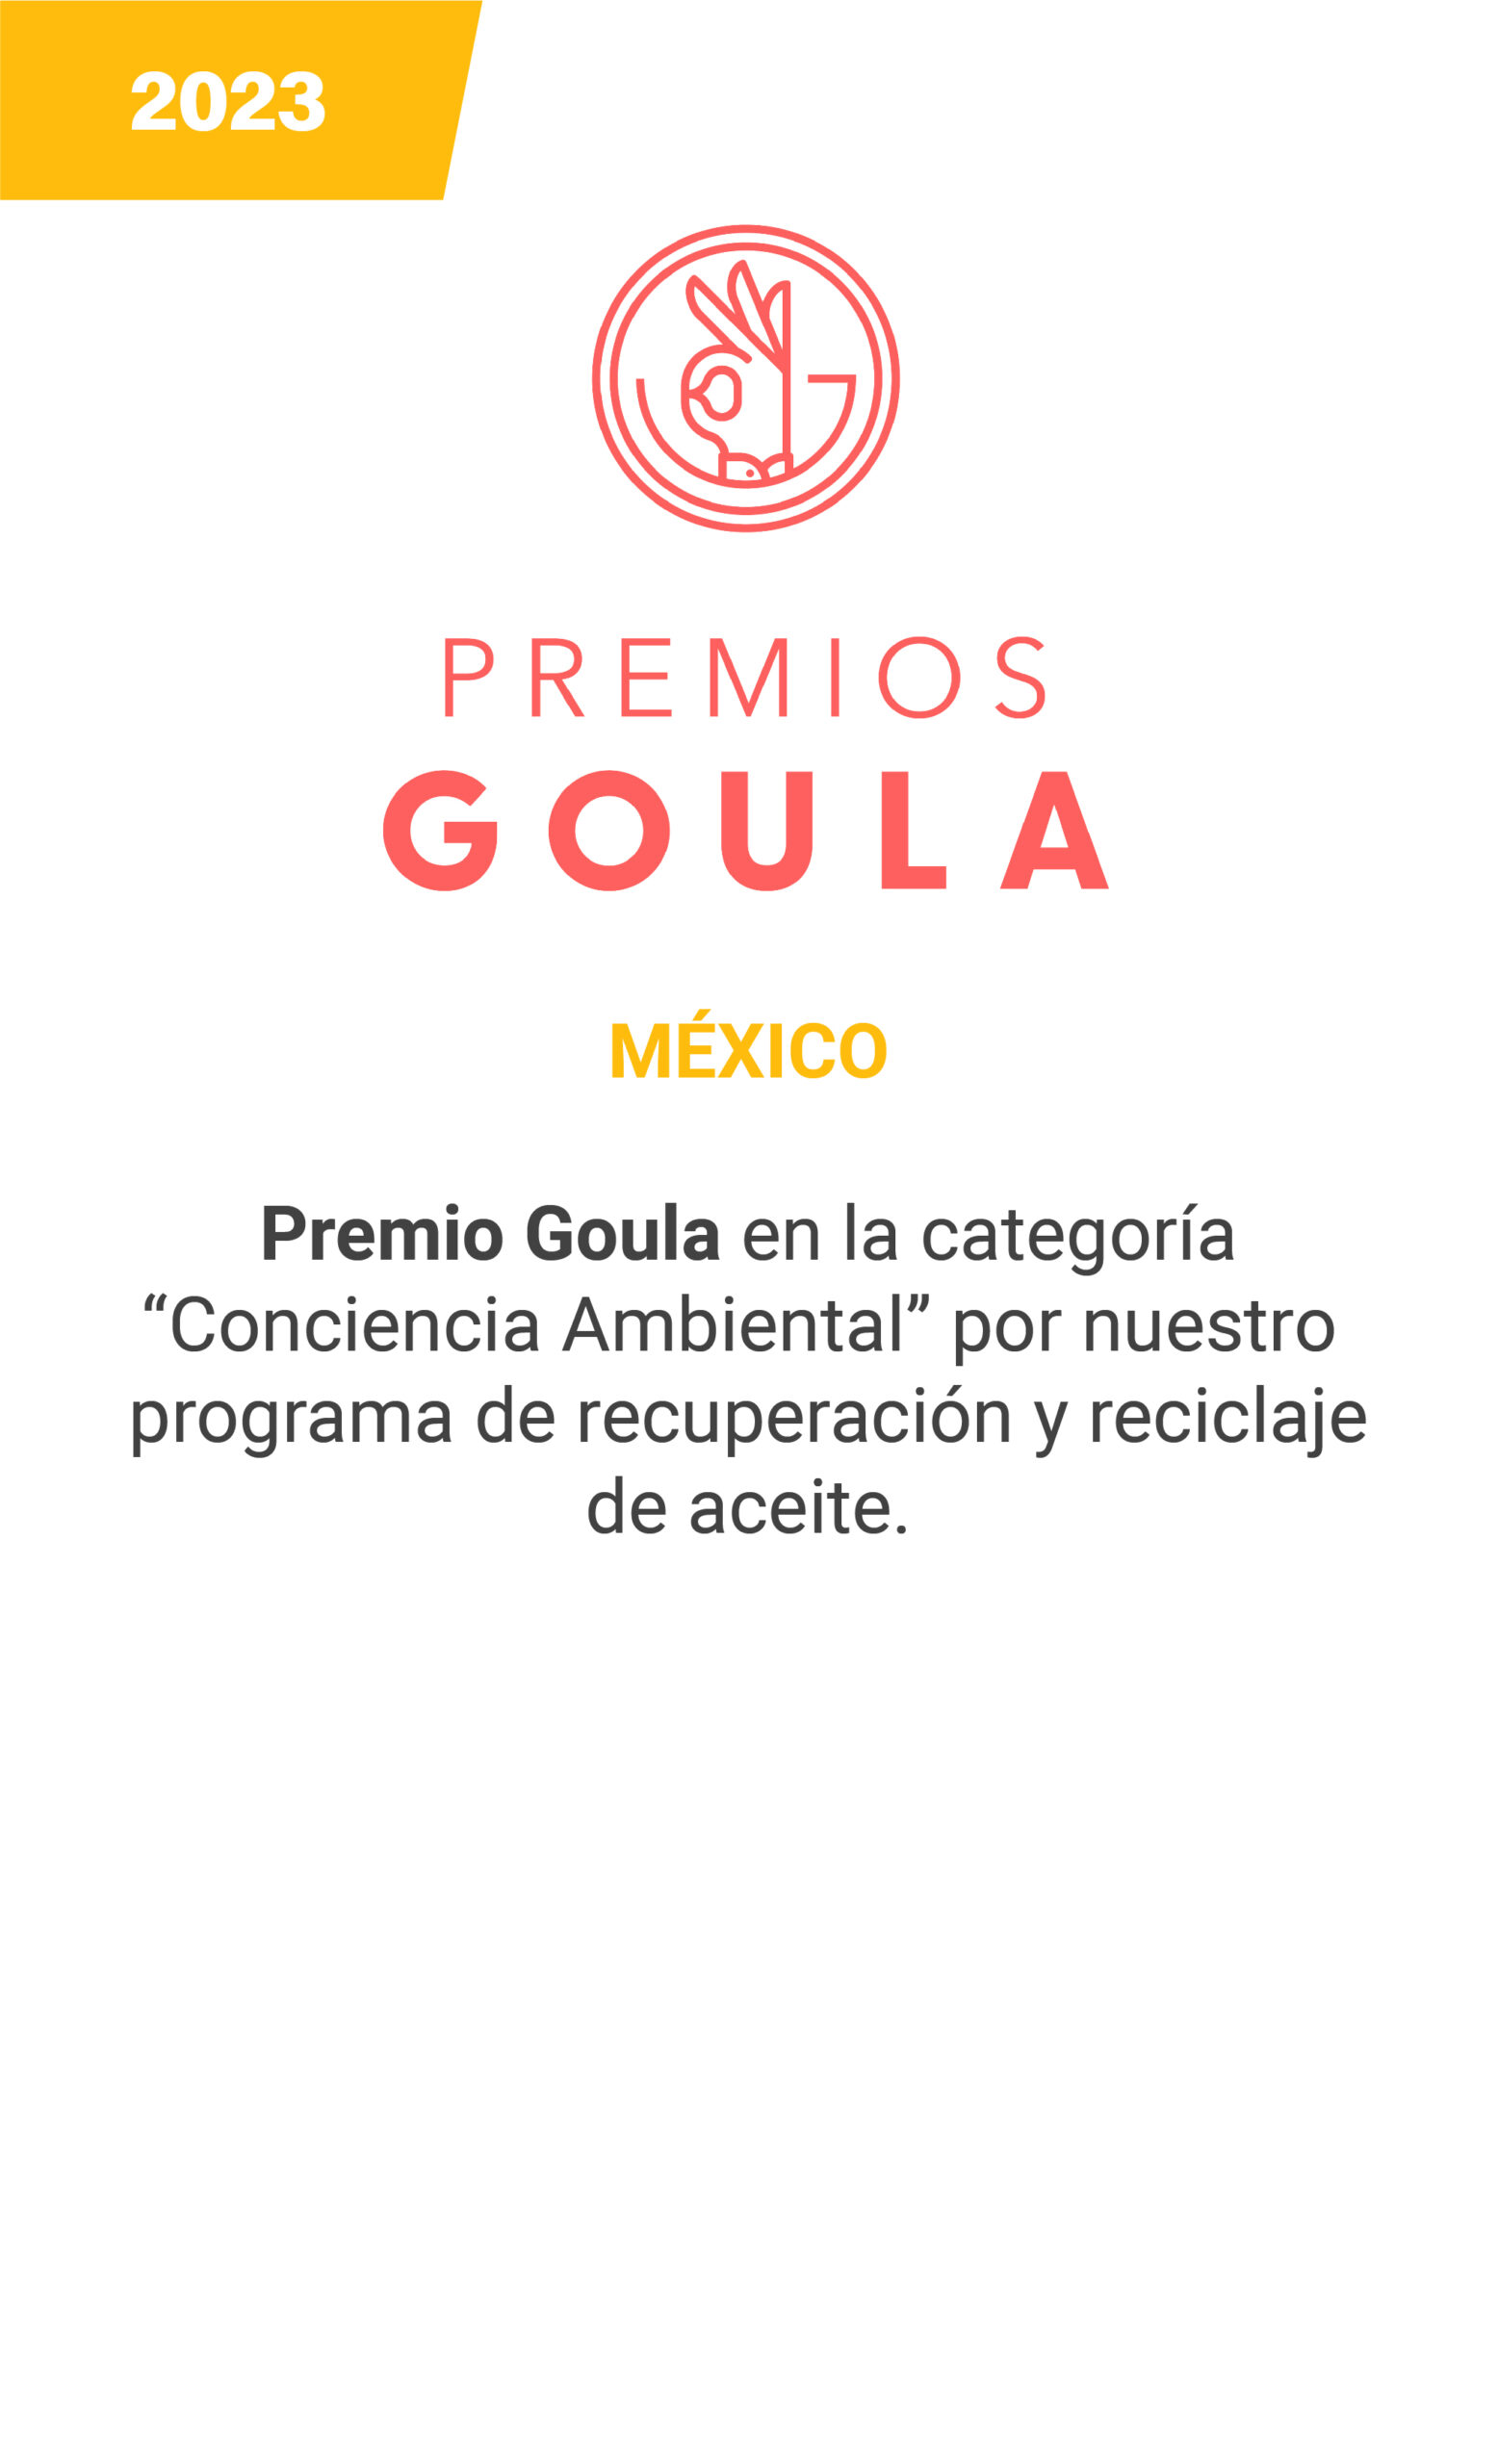 Guola - Mexico 2023 - mobile